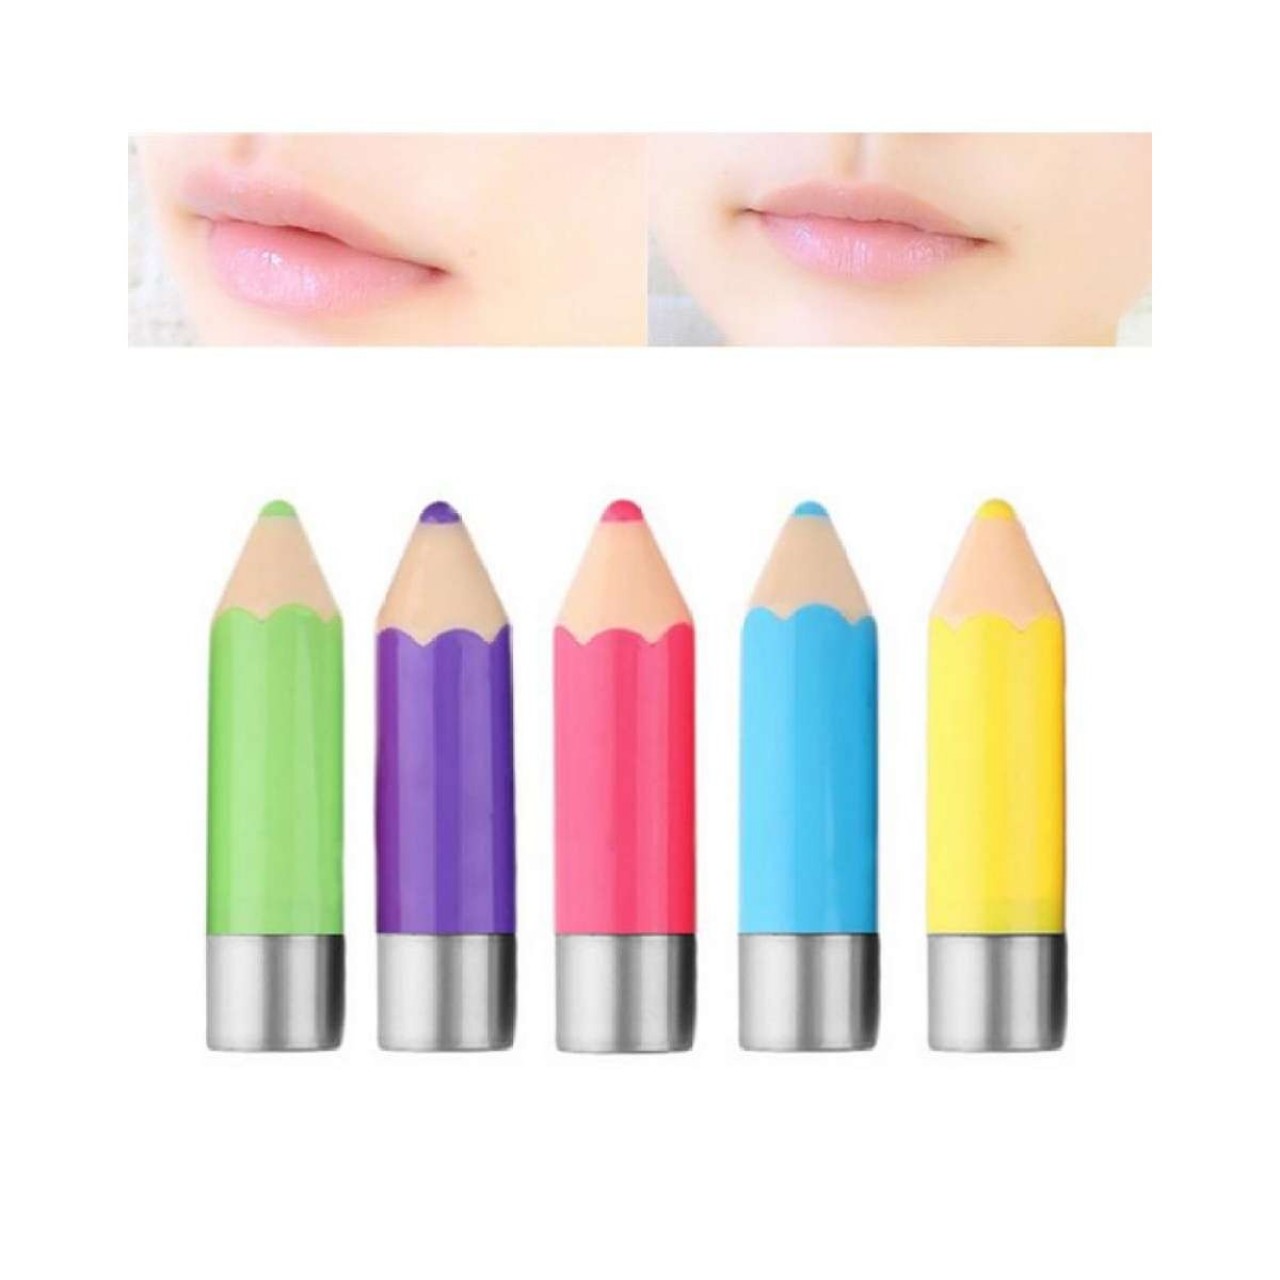 Pencil Shaped Solid Moisturizer Stick Lip Balm - Multi color